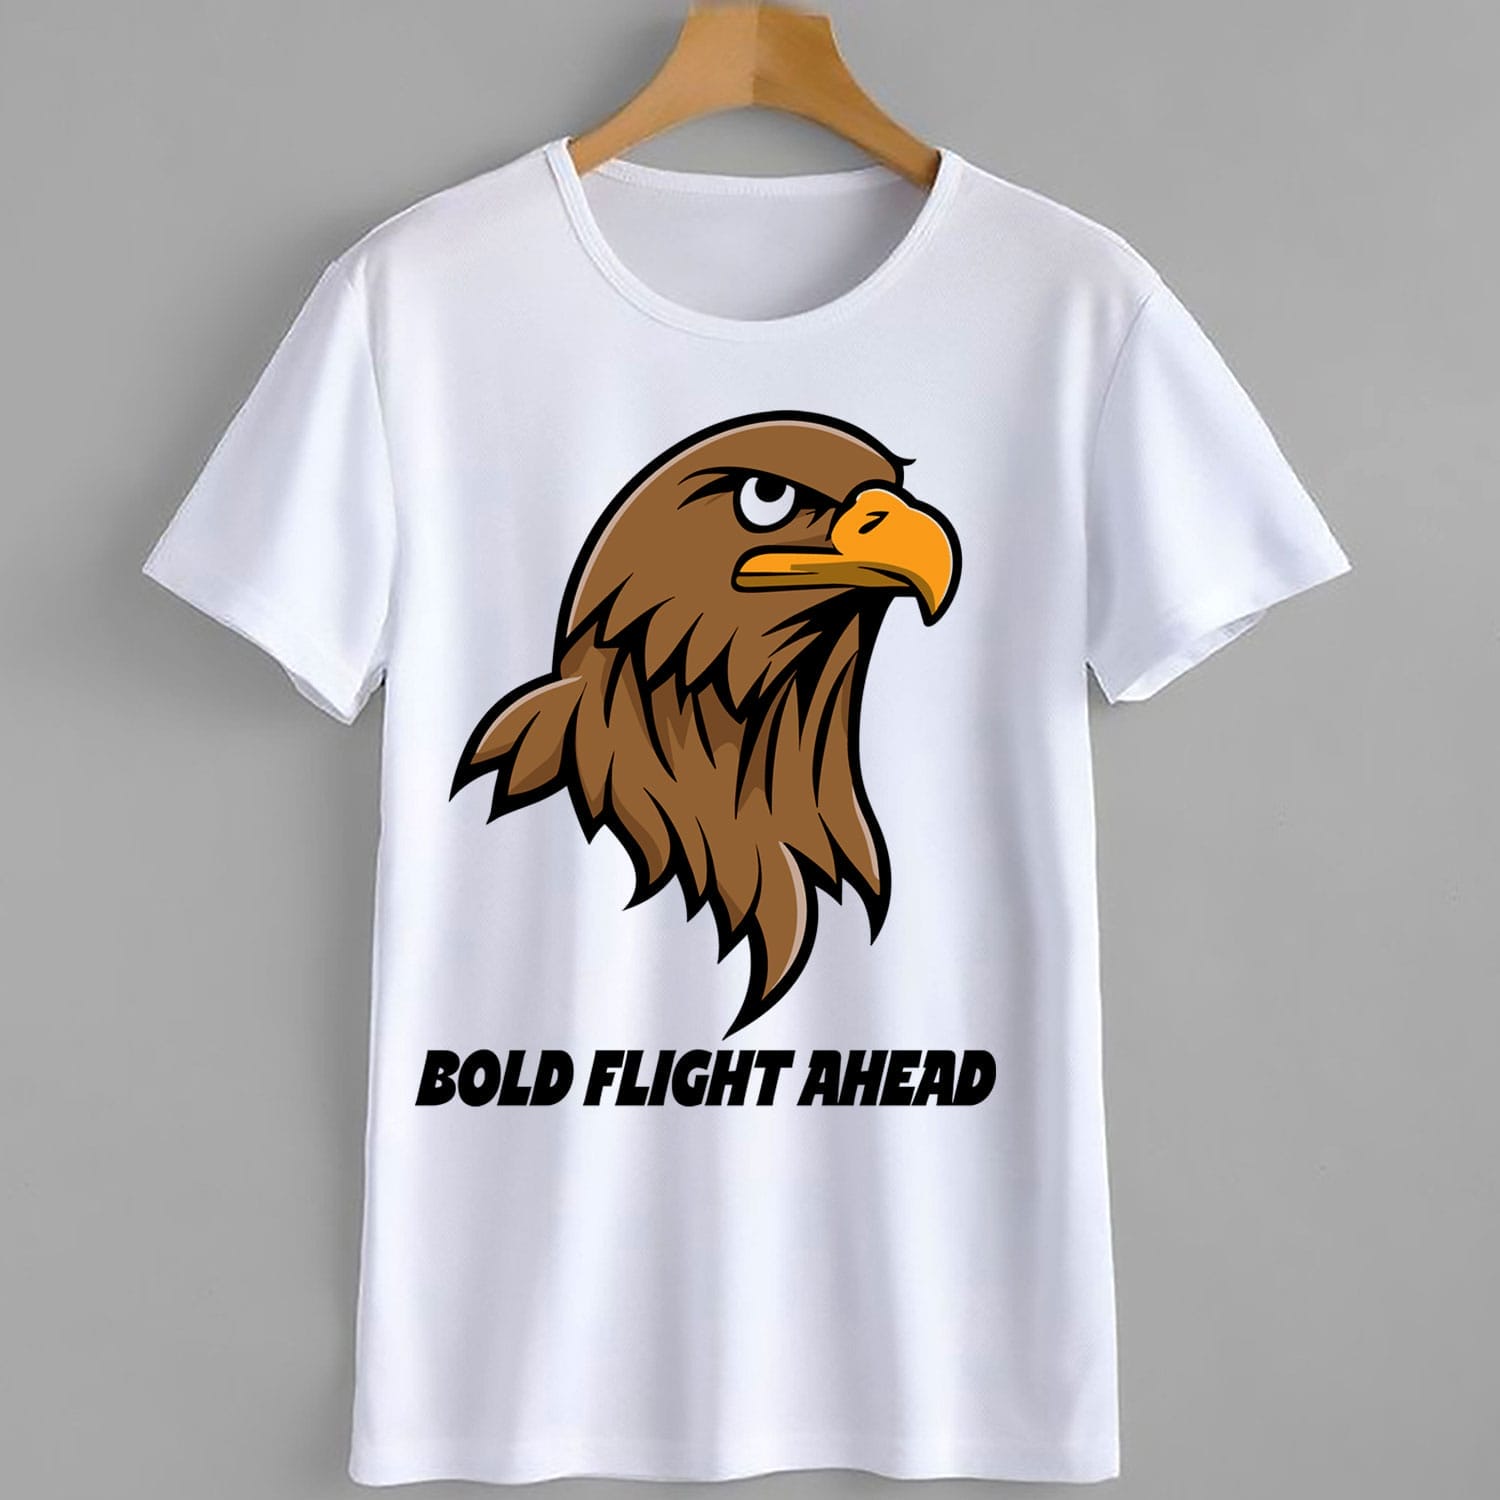 Bold flight ahead- eagle t shirt design